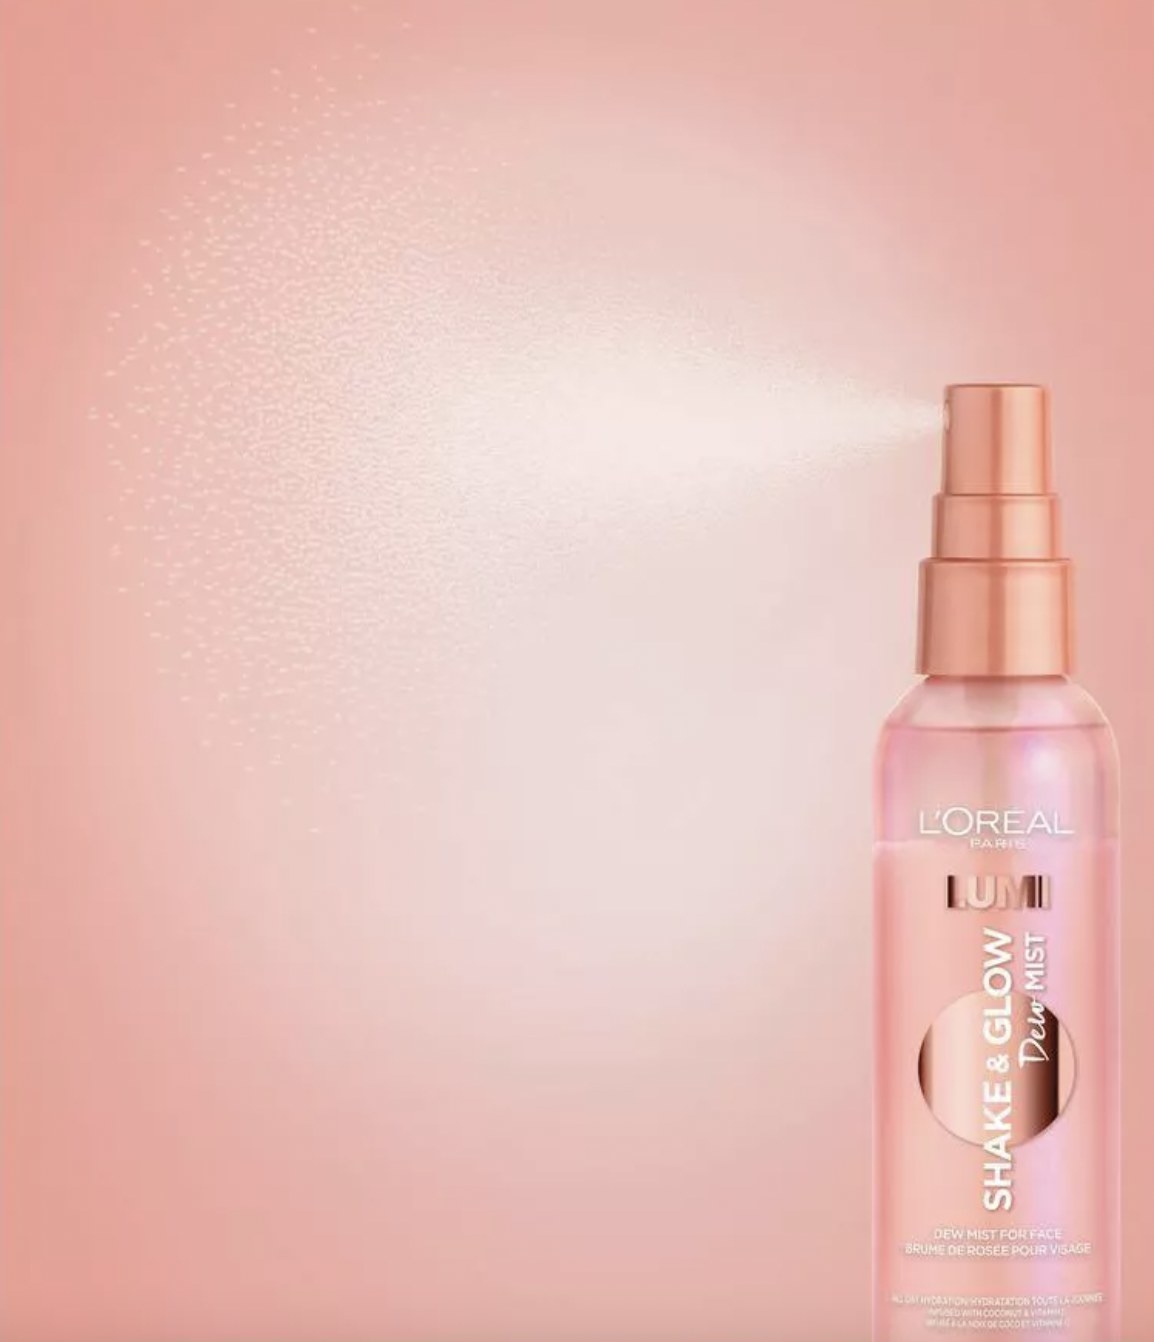 A bottle of makeup glow spray